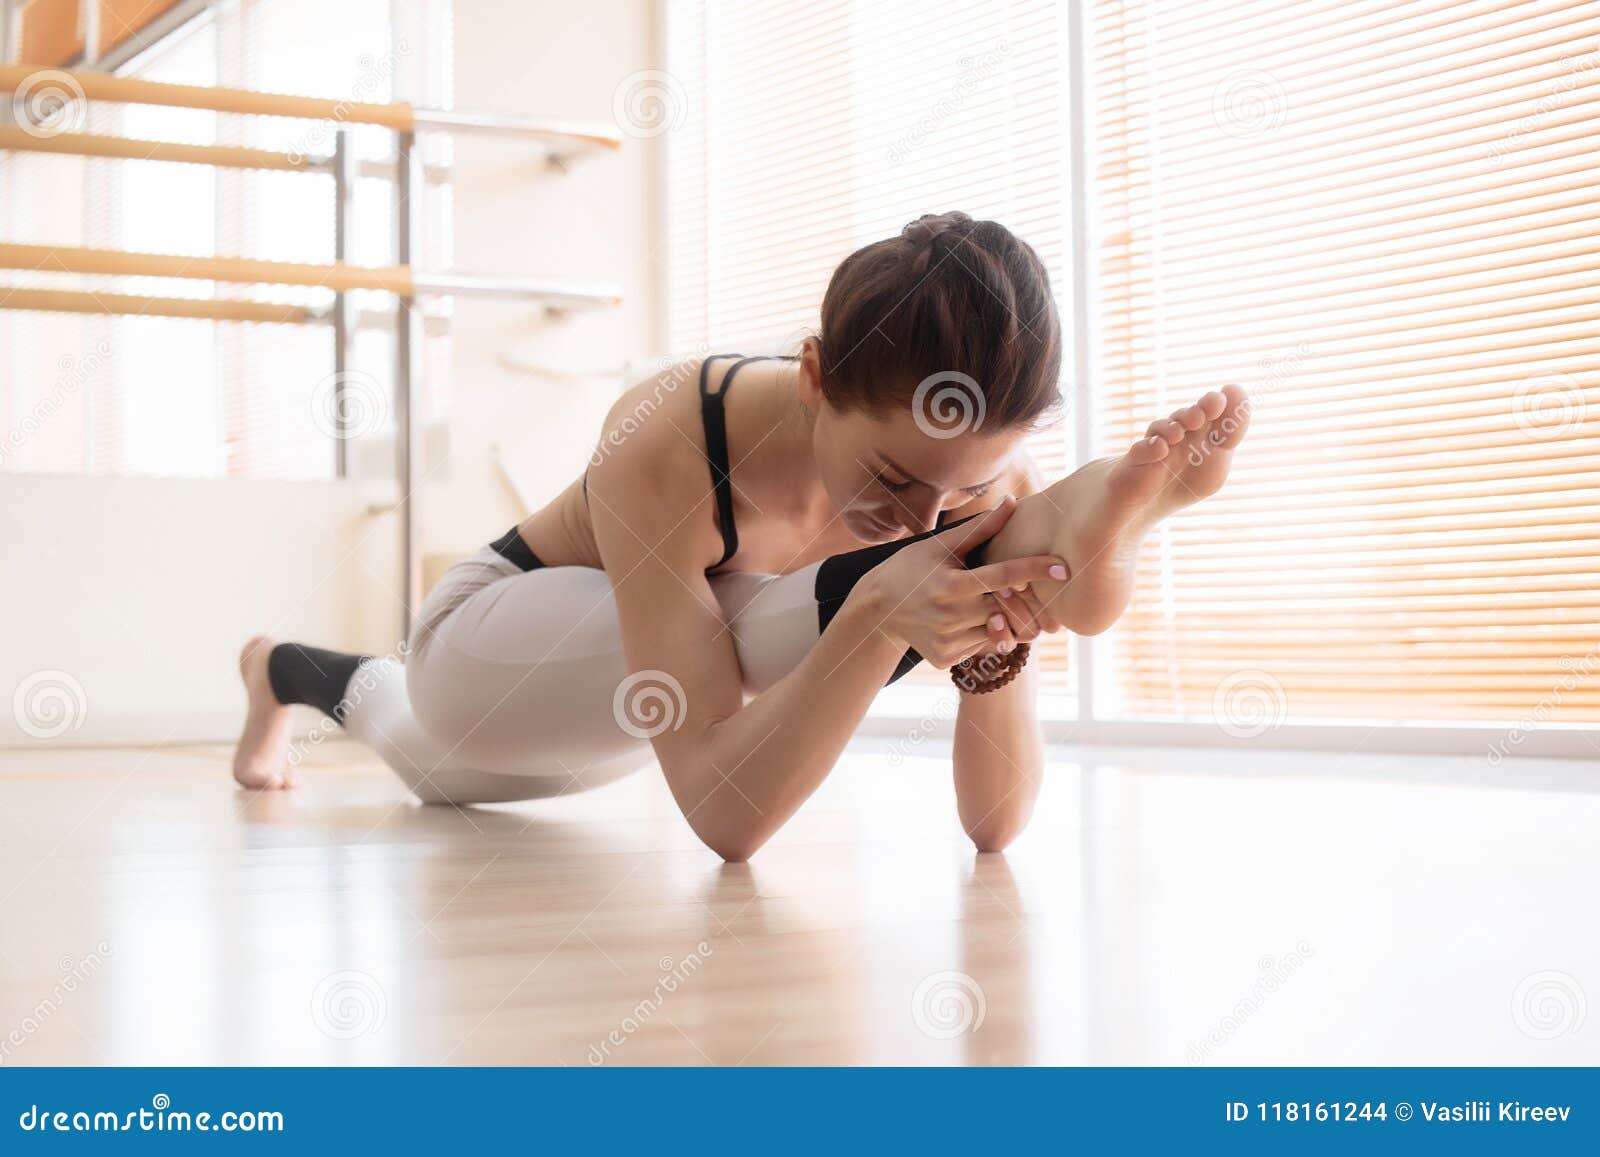 Barefoot Woman Practicing Yoga in Studio Stock Photo - Image of practice,  sportswear: 118161244